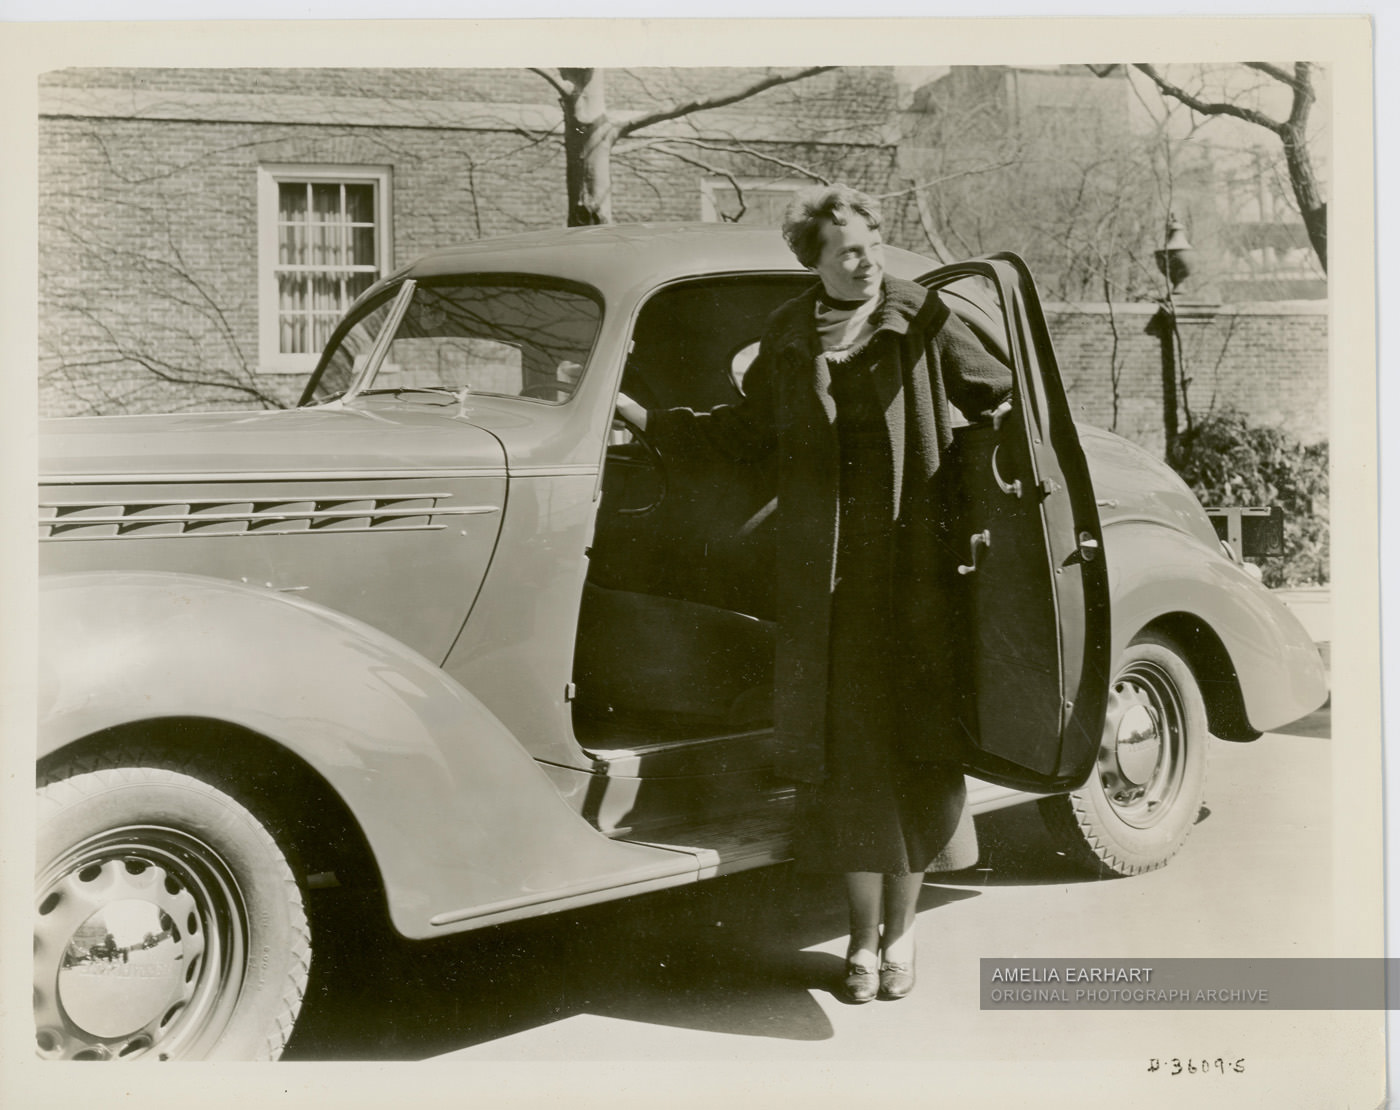 Amelia Earhart Original Photograph Archive